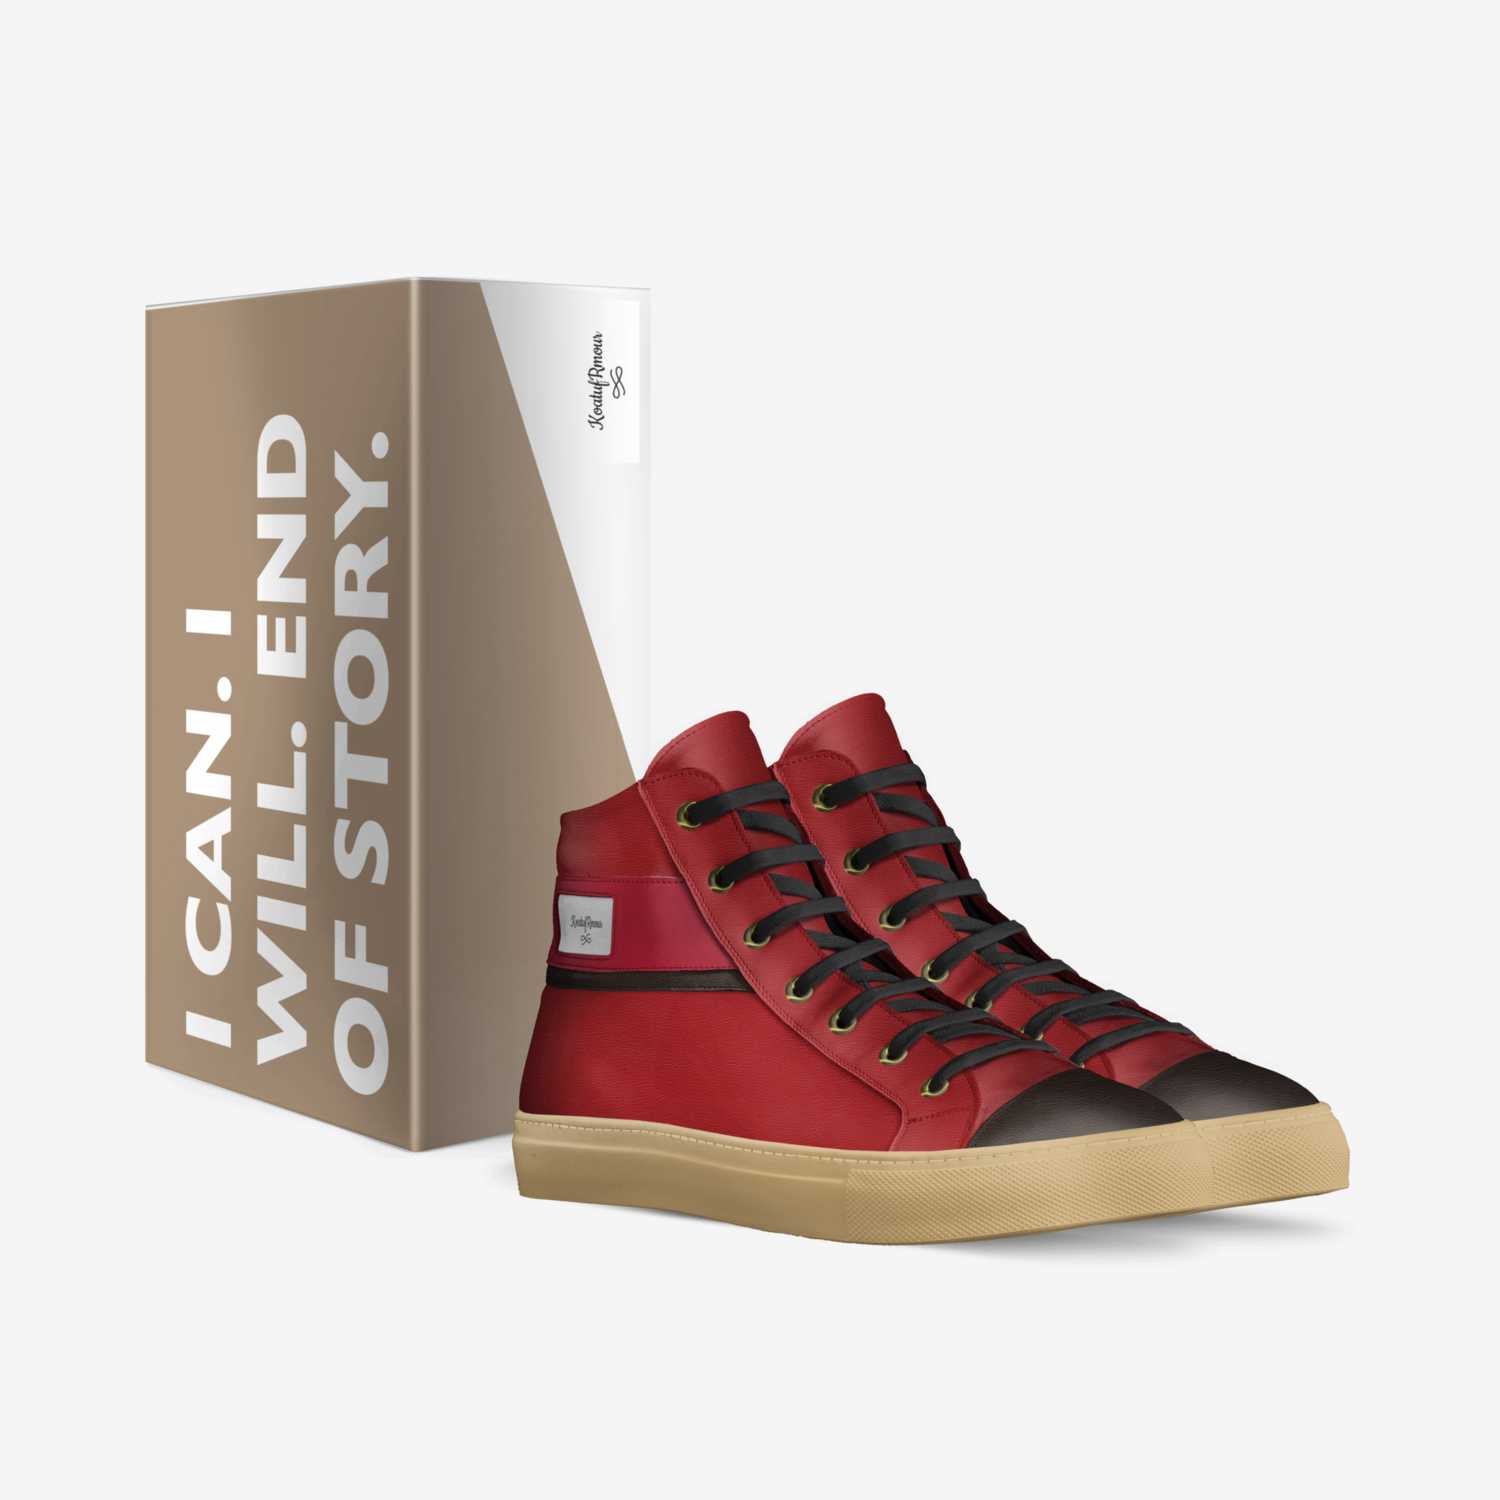 KoatufRmour custom made in Italy shoes by Mekola Shelton | Box view